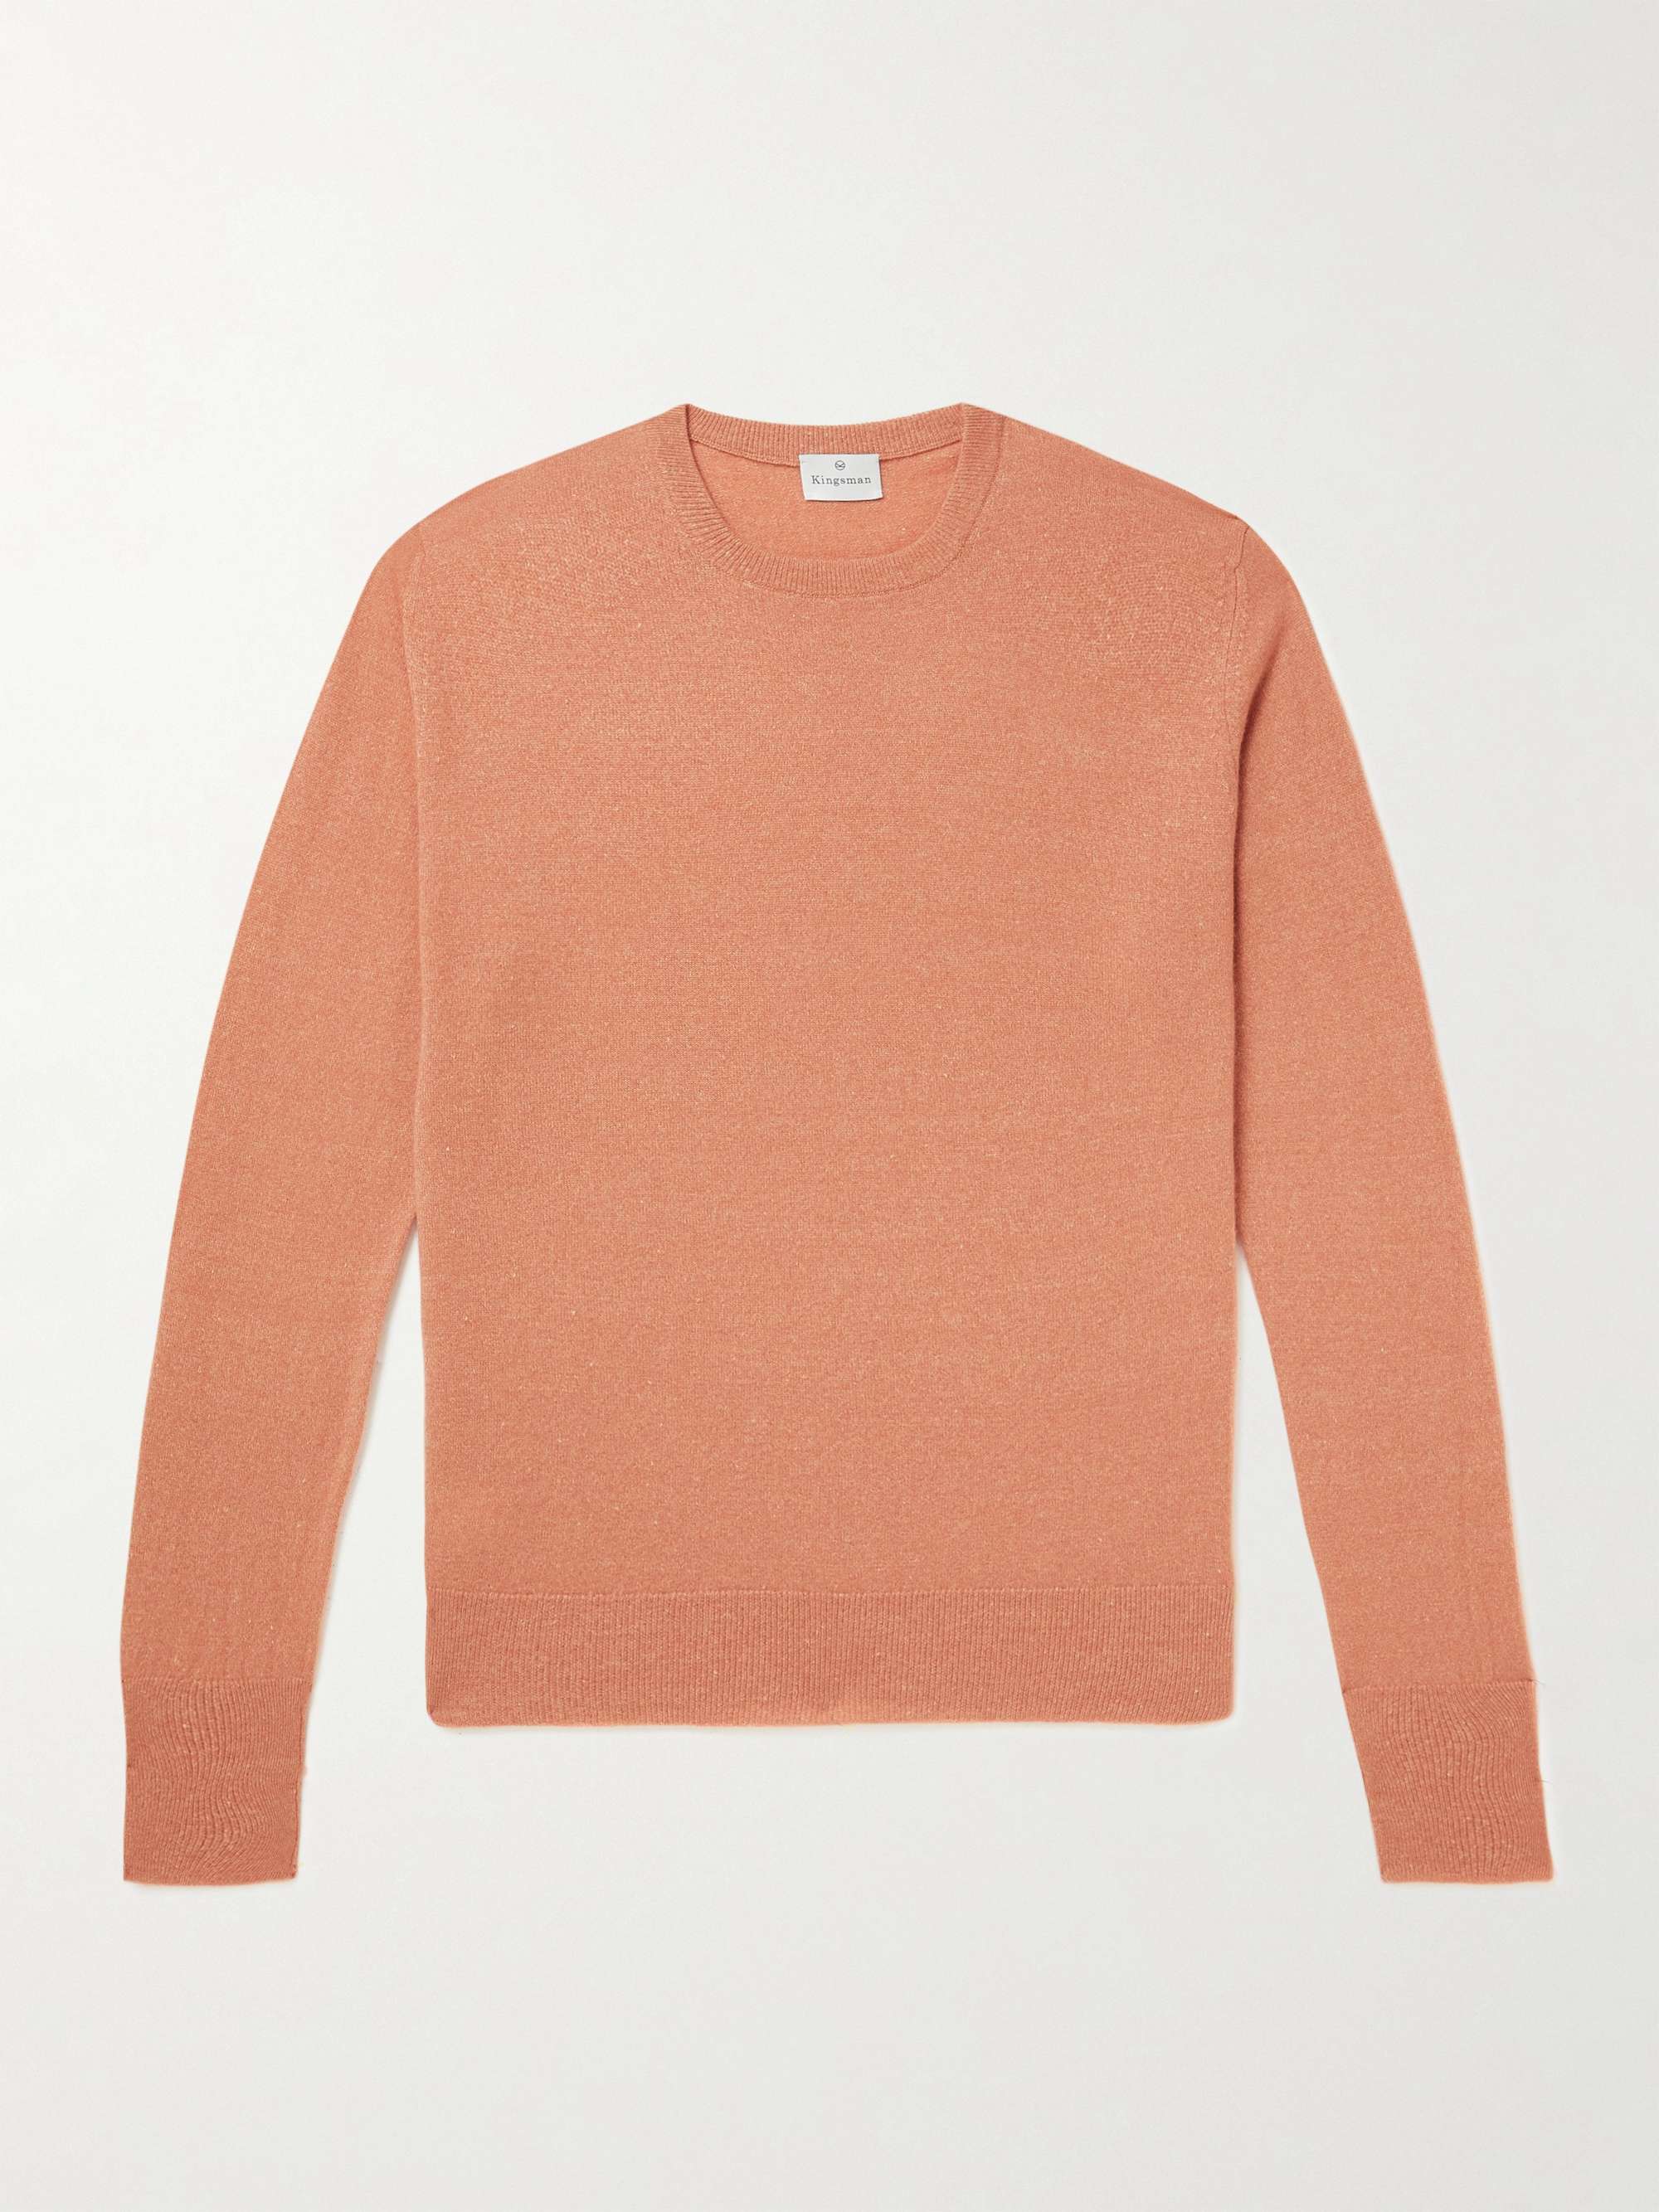 KINGSMAN Striped Cotton and Cashmere-Blend Jersey Sweatshirt